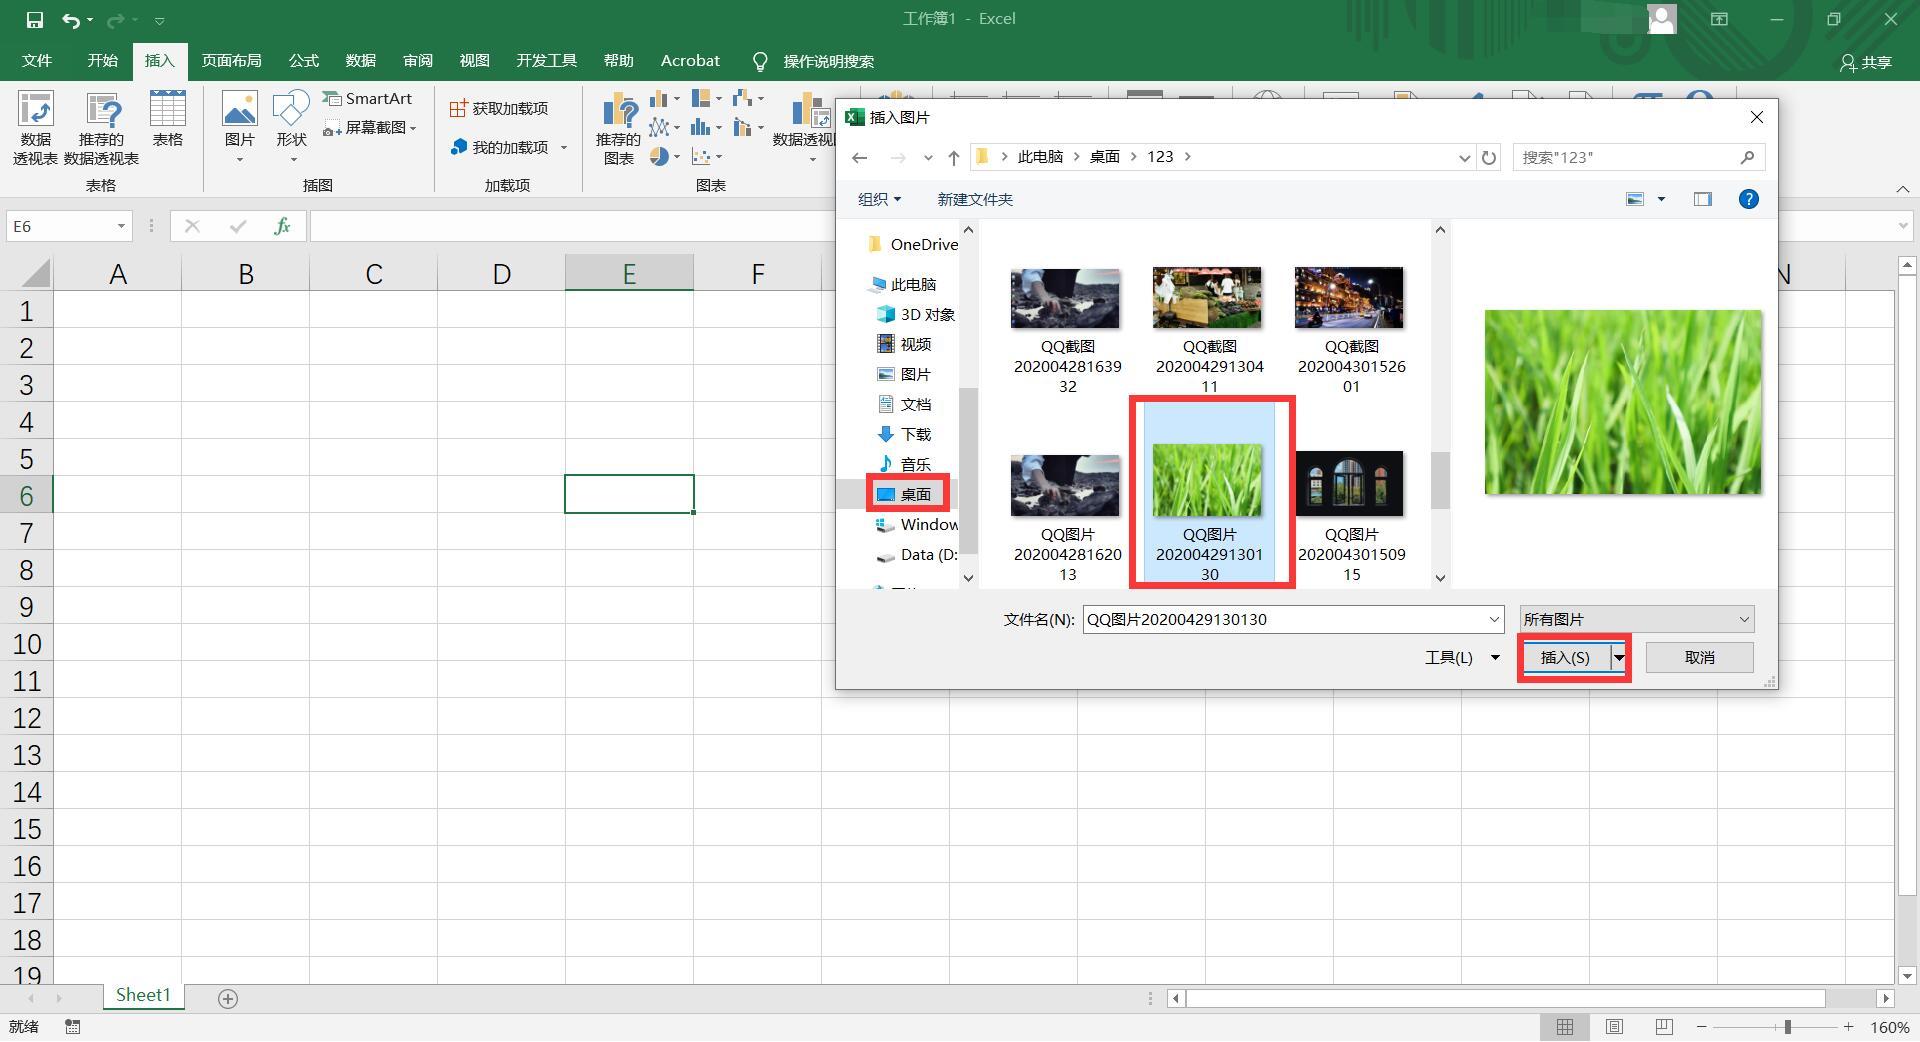 Excel根据表格内容批量导入图片到单元格批注 - 知乎